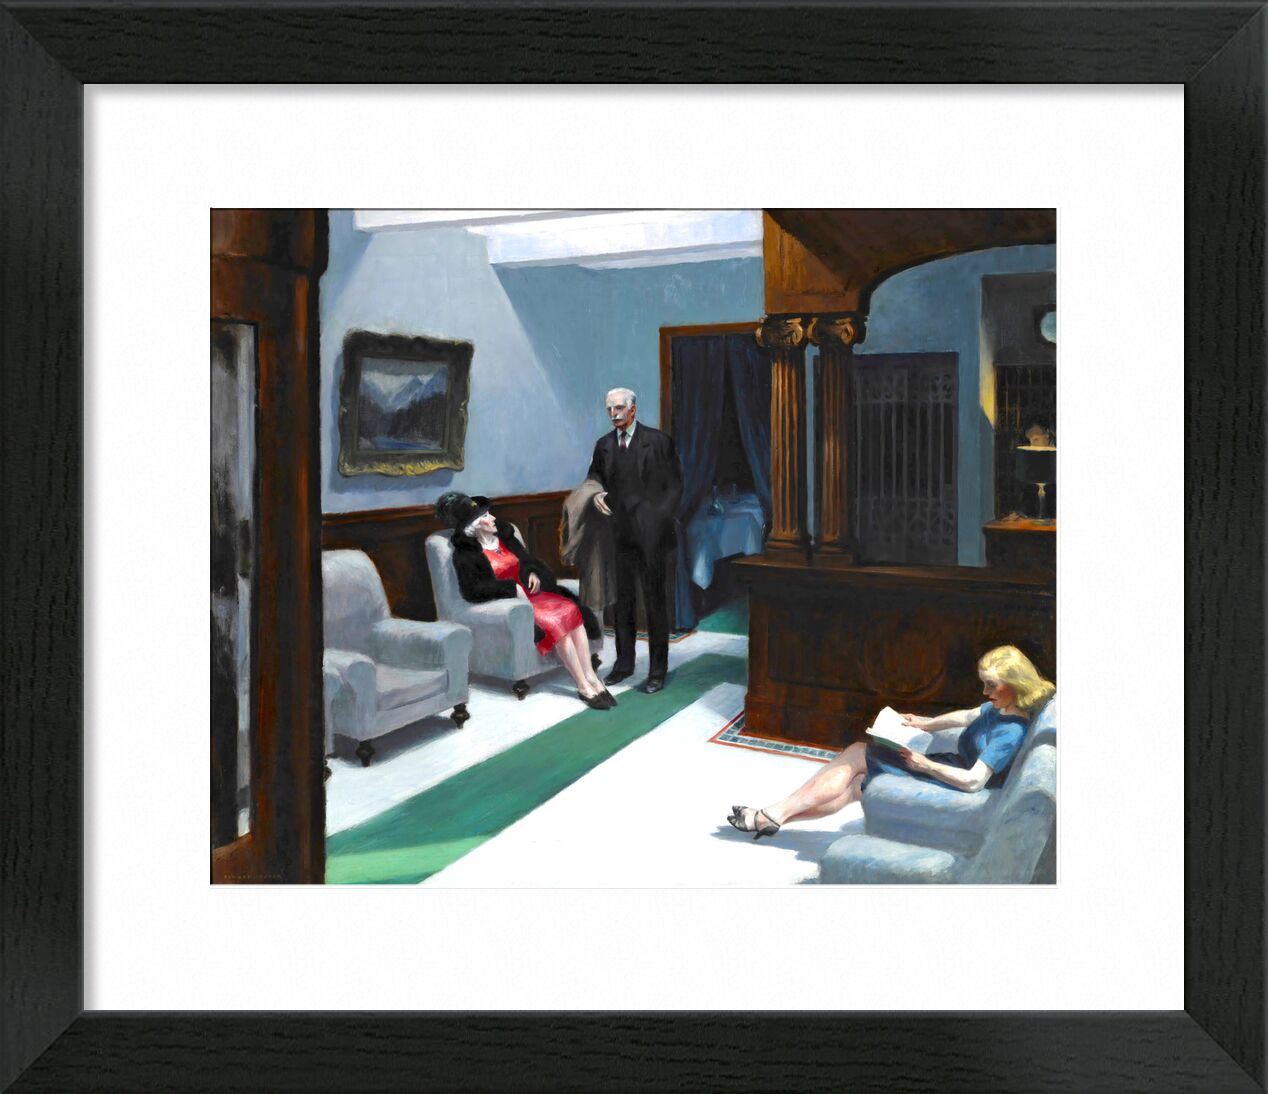 Hotel Lobby - Edward Hopper von Bildende Kunst, Prodi Art, Edward Hopper, Hotel, Malerei, Frau, Mann, Rezeption